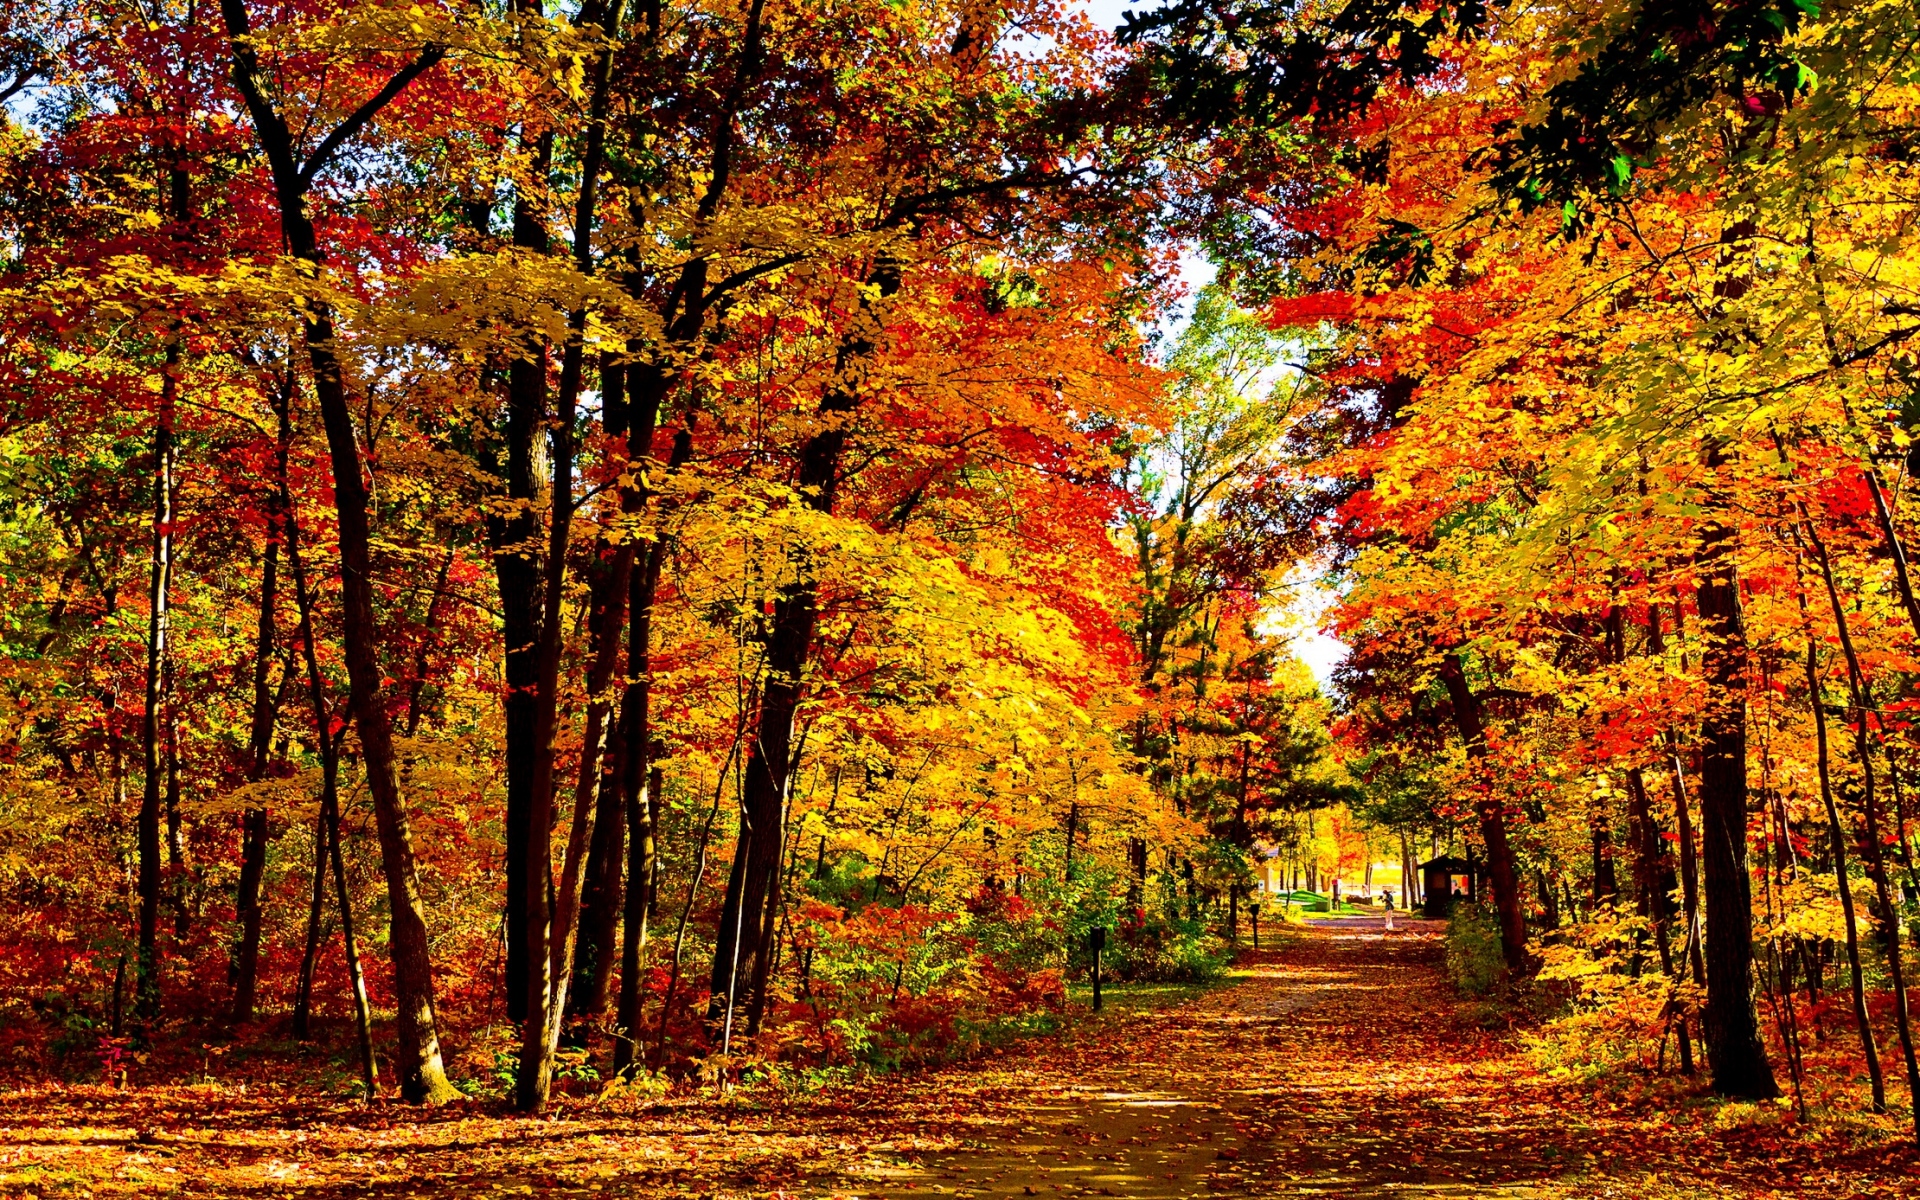 Картинки США, Висконсин, дерево, осень, деревья, листопад, ярко, дорого фото и обои на рабочий стол